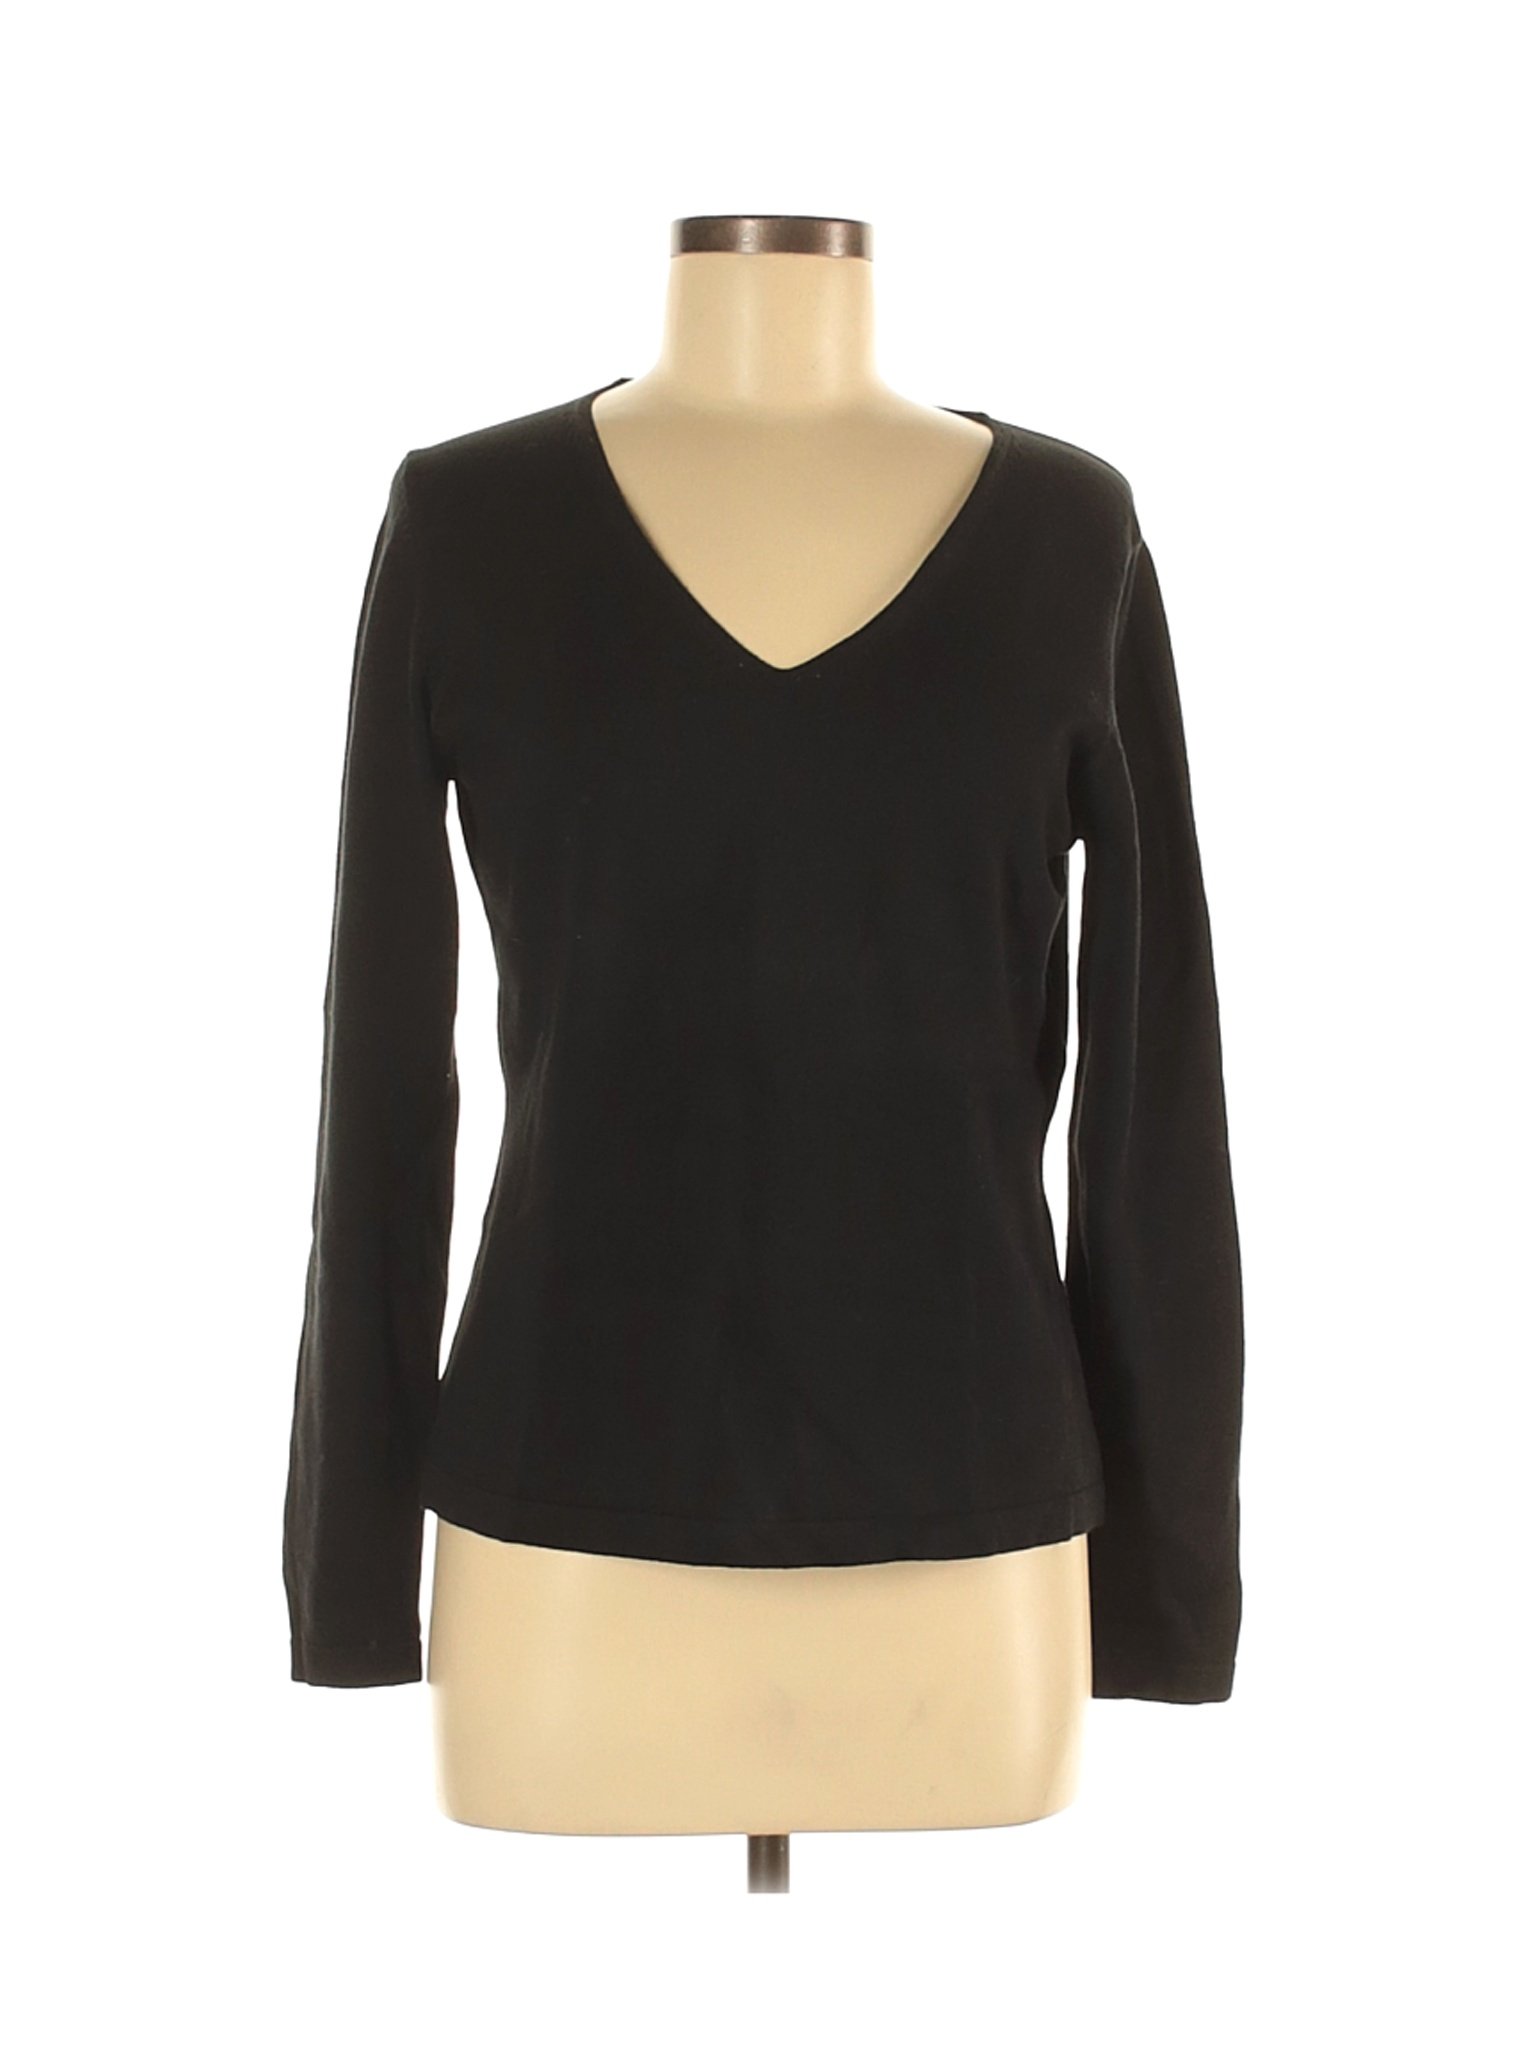 Gap Women Black Pullover Sweater M | eBay